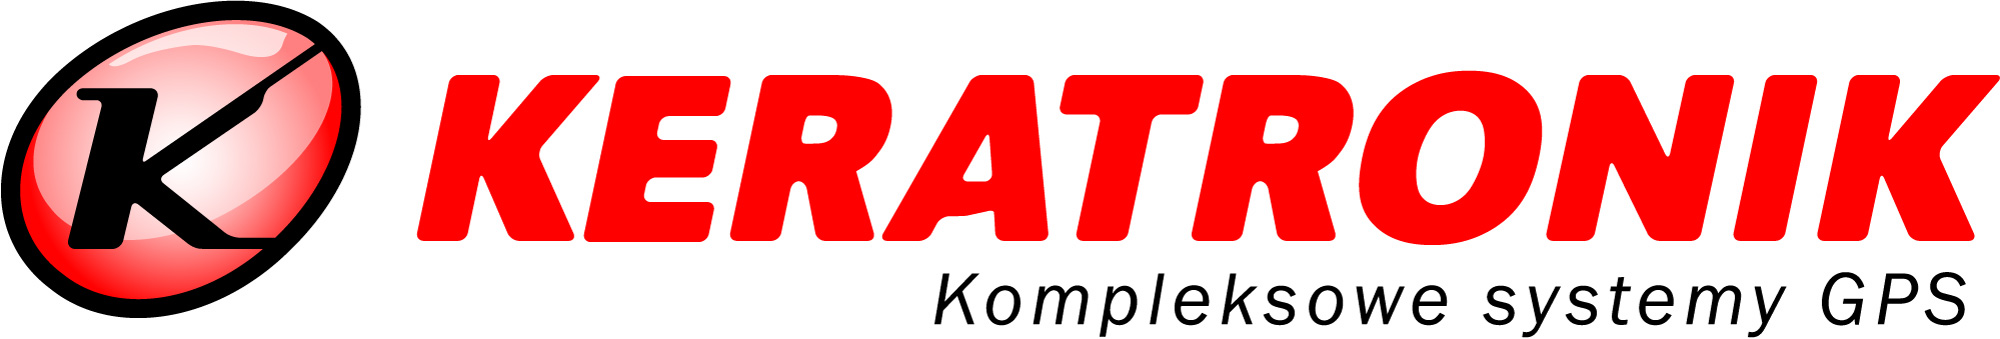 Keratronik_logo_kolor.jpg